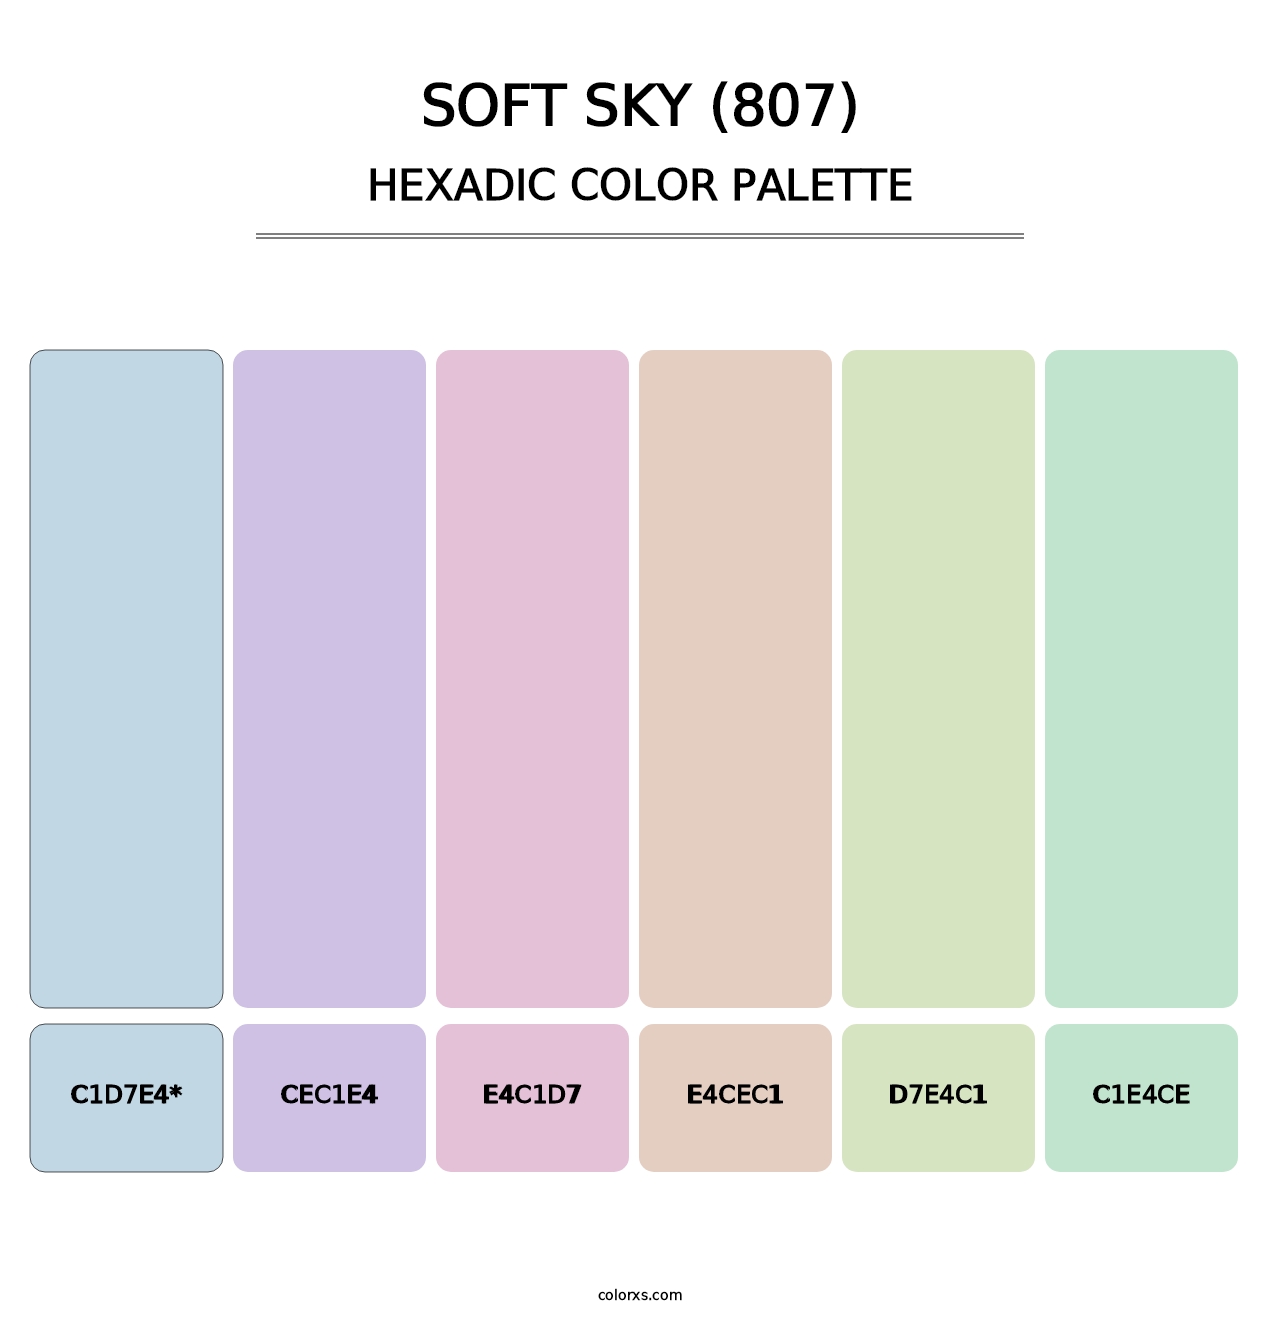 Soft Sky (807) - Hexadic Color Palette